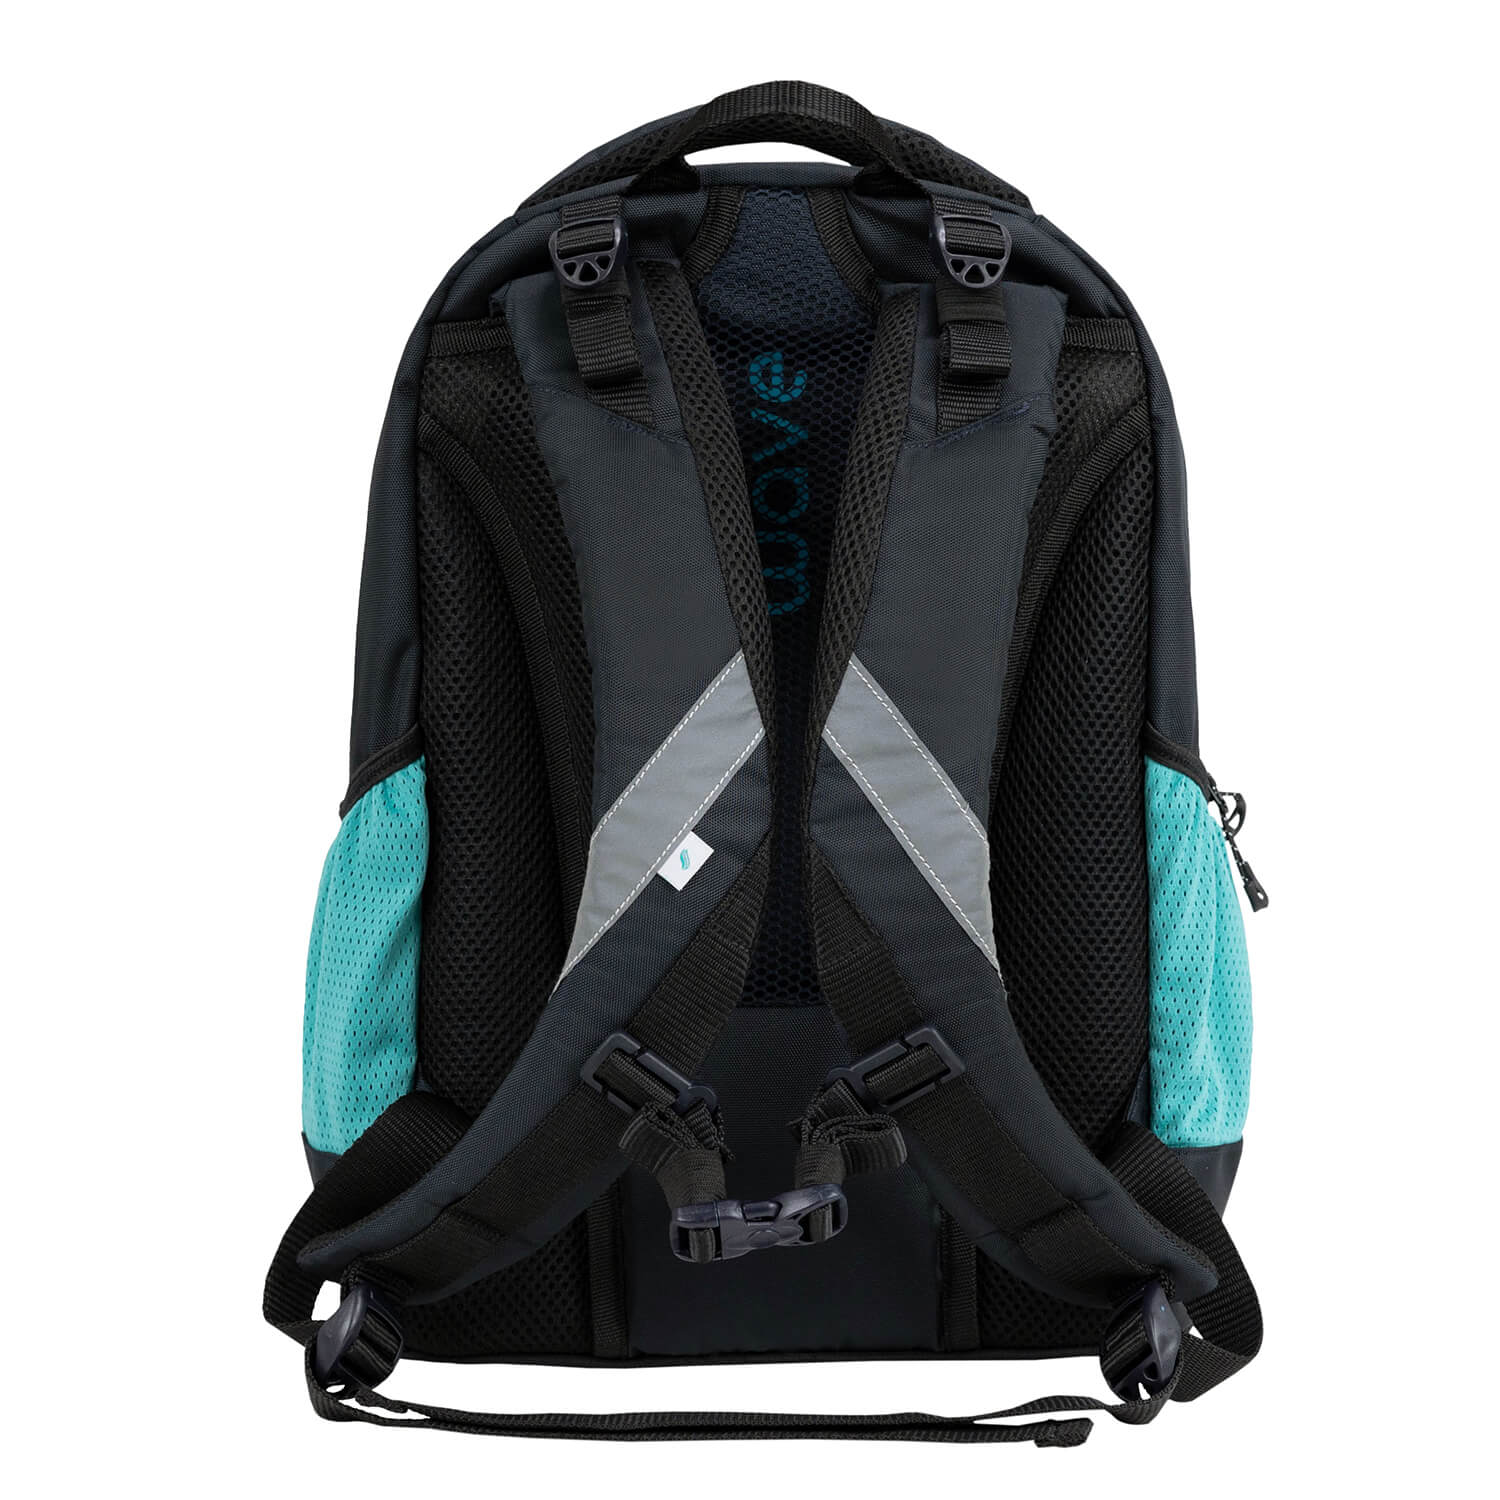 Wave Boost Gradient Aurora school backpack